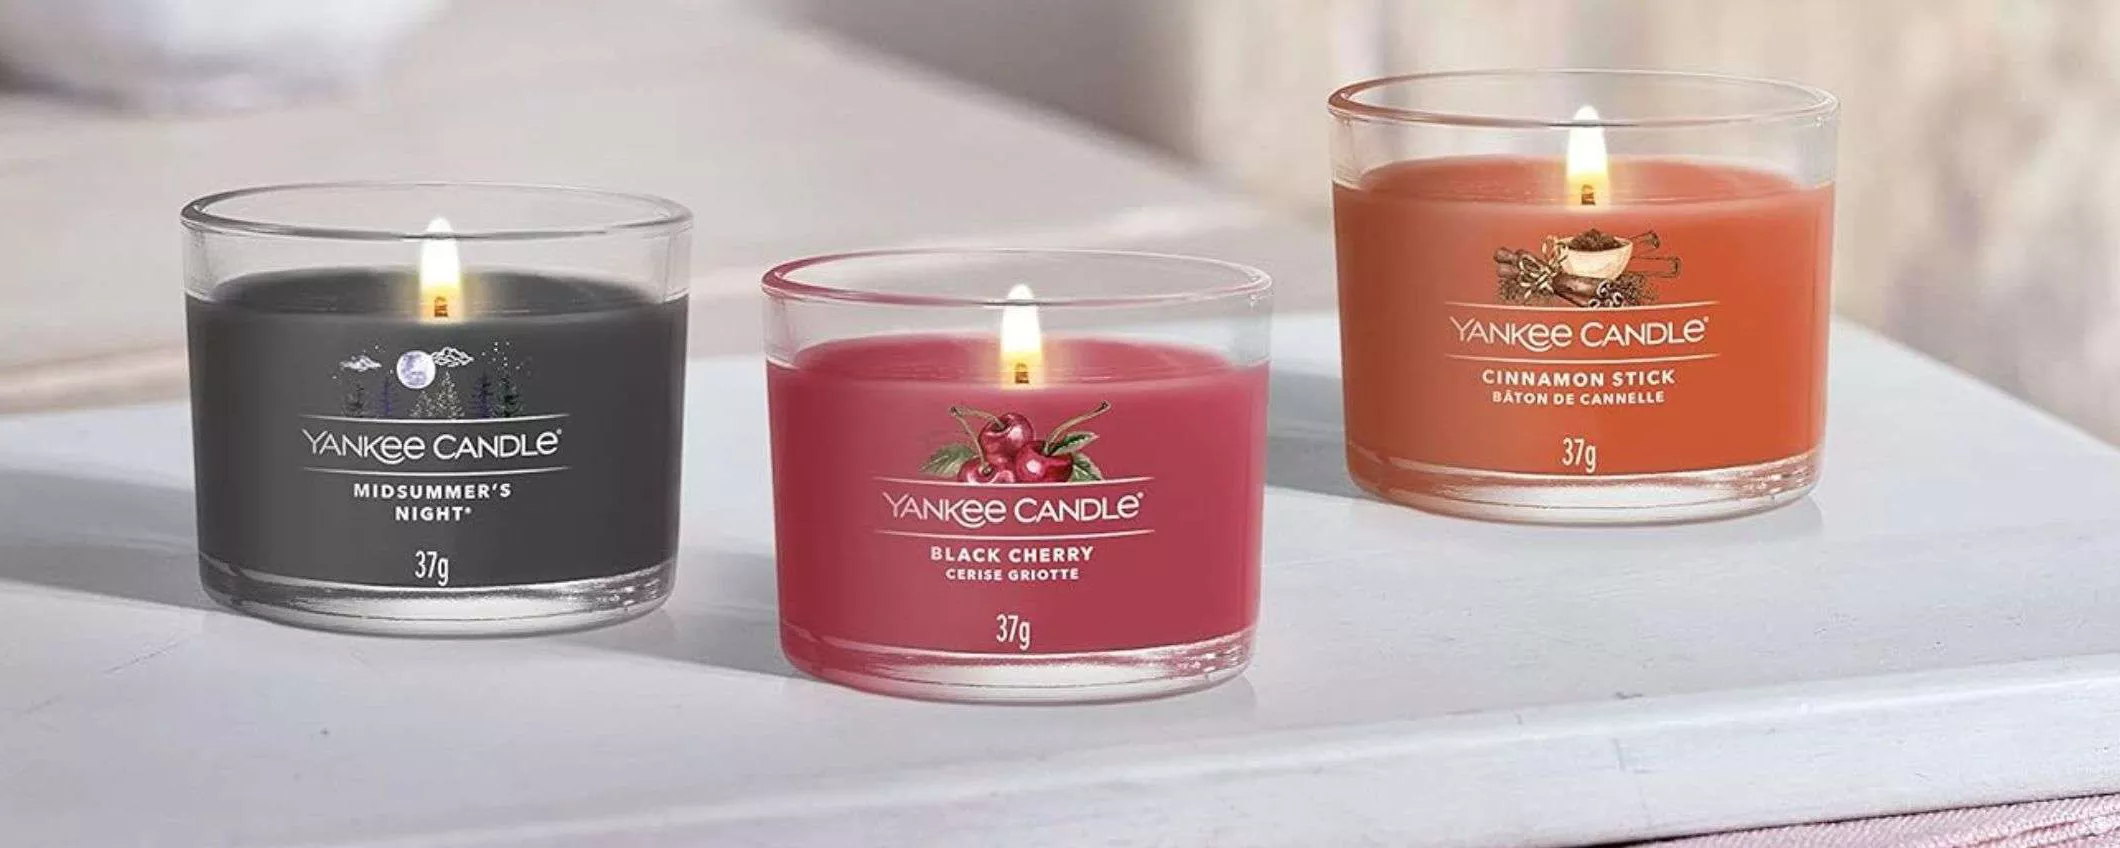 Yankee Candle: 9,99€ per il tris di candele in vetro, MERAVIGLIA